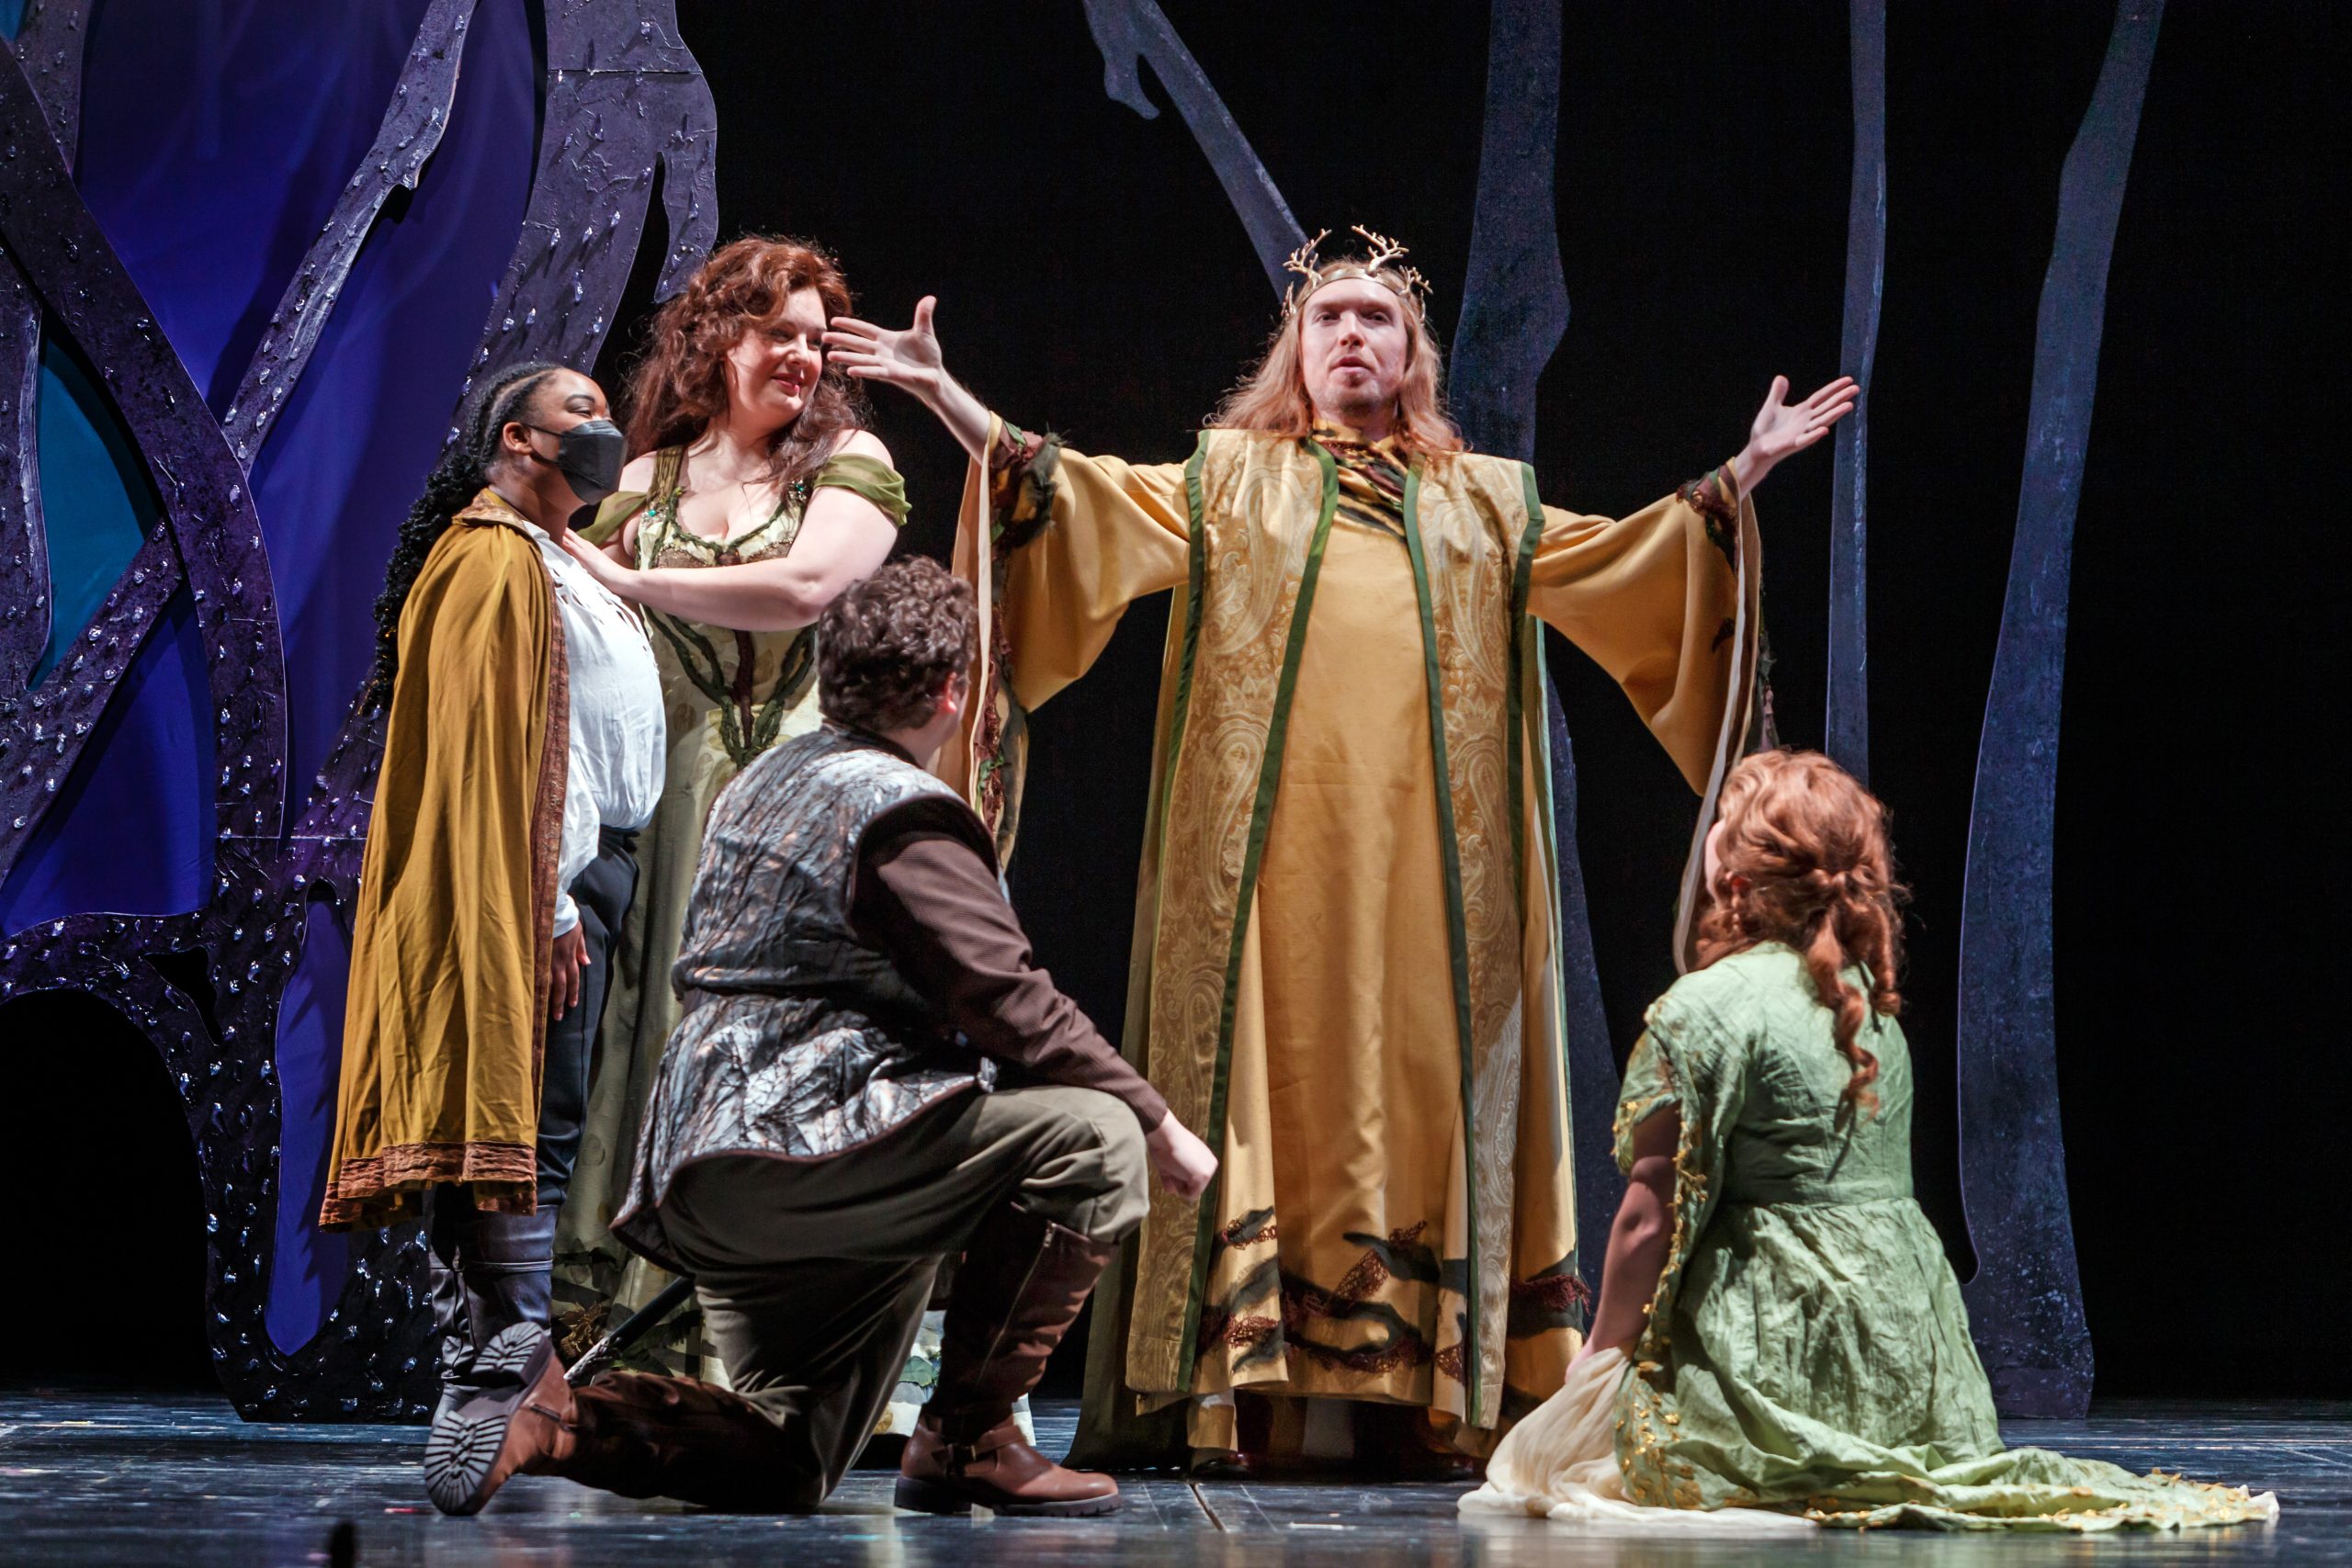 The King (Evan Lazdowski) blesses two couples in Pittsburgh Opera's 'Ariodante.'